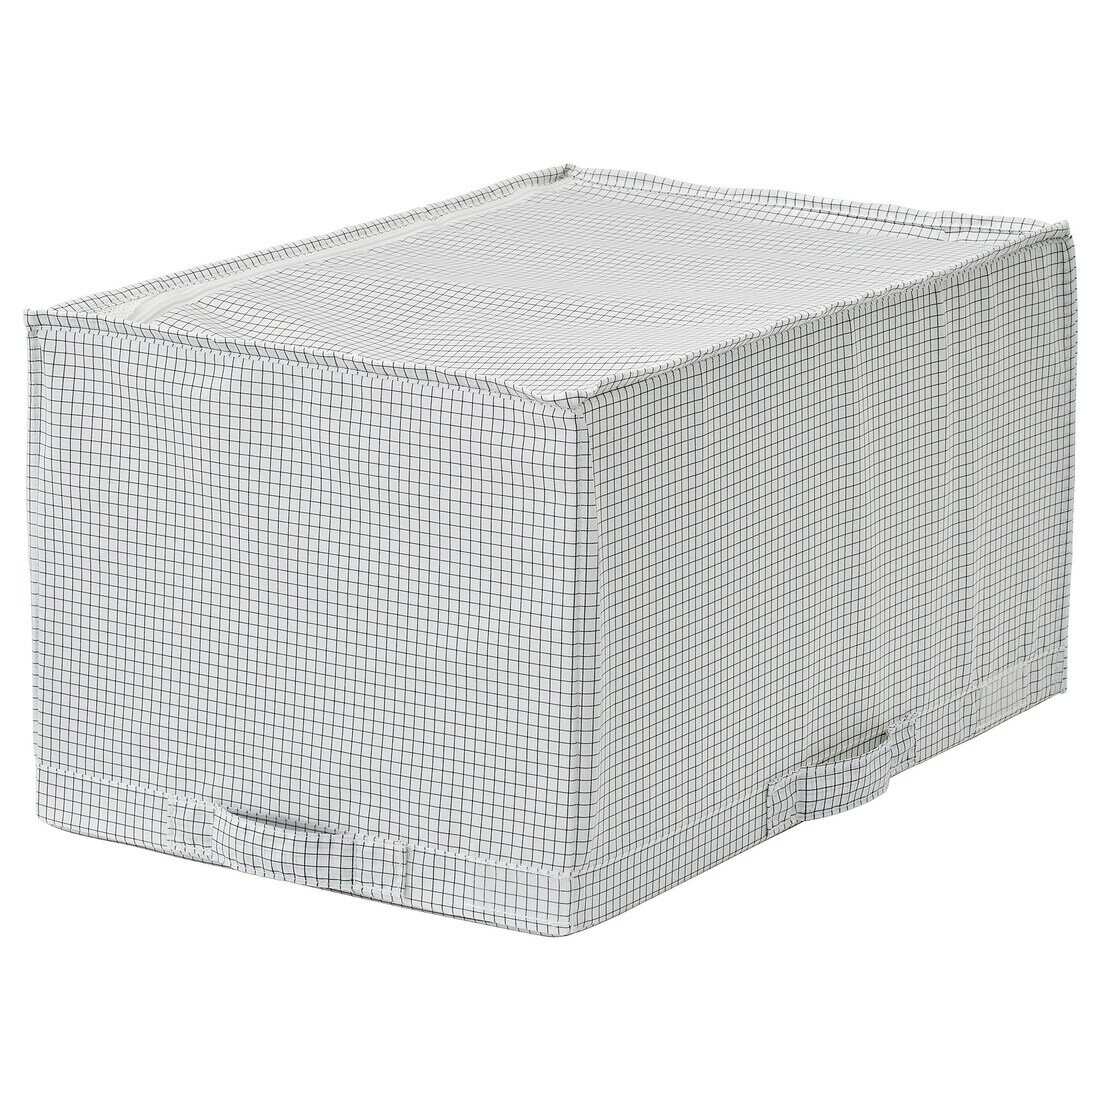 Сумка для хранения, белый/серый, 34х51х28, стук икеа, STUK IKEA